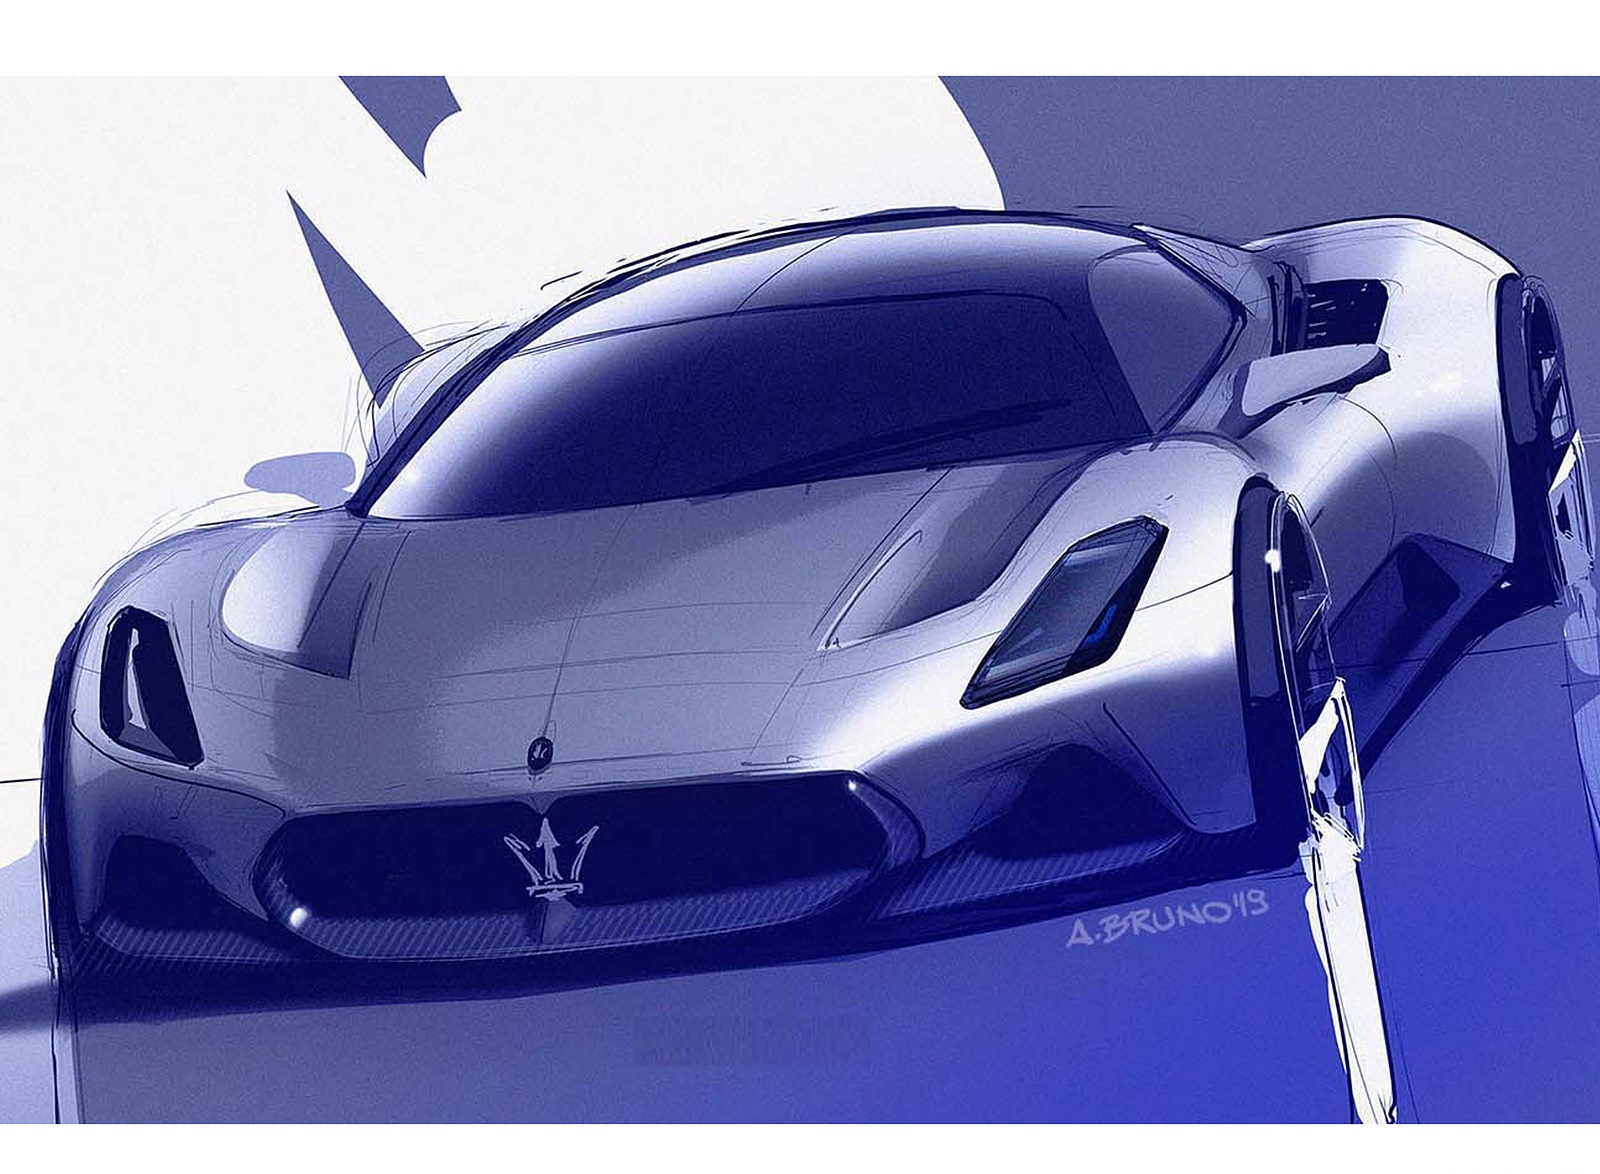 2021 Maserati MC20 Design Sketch Wallpapers #145 of 158